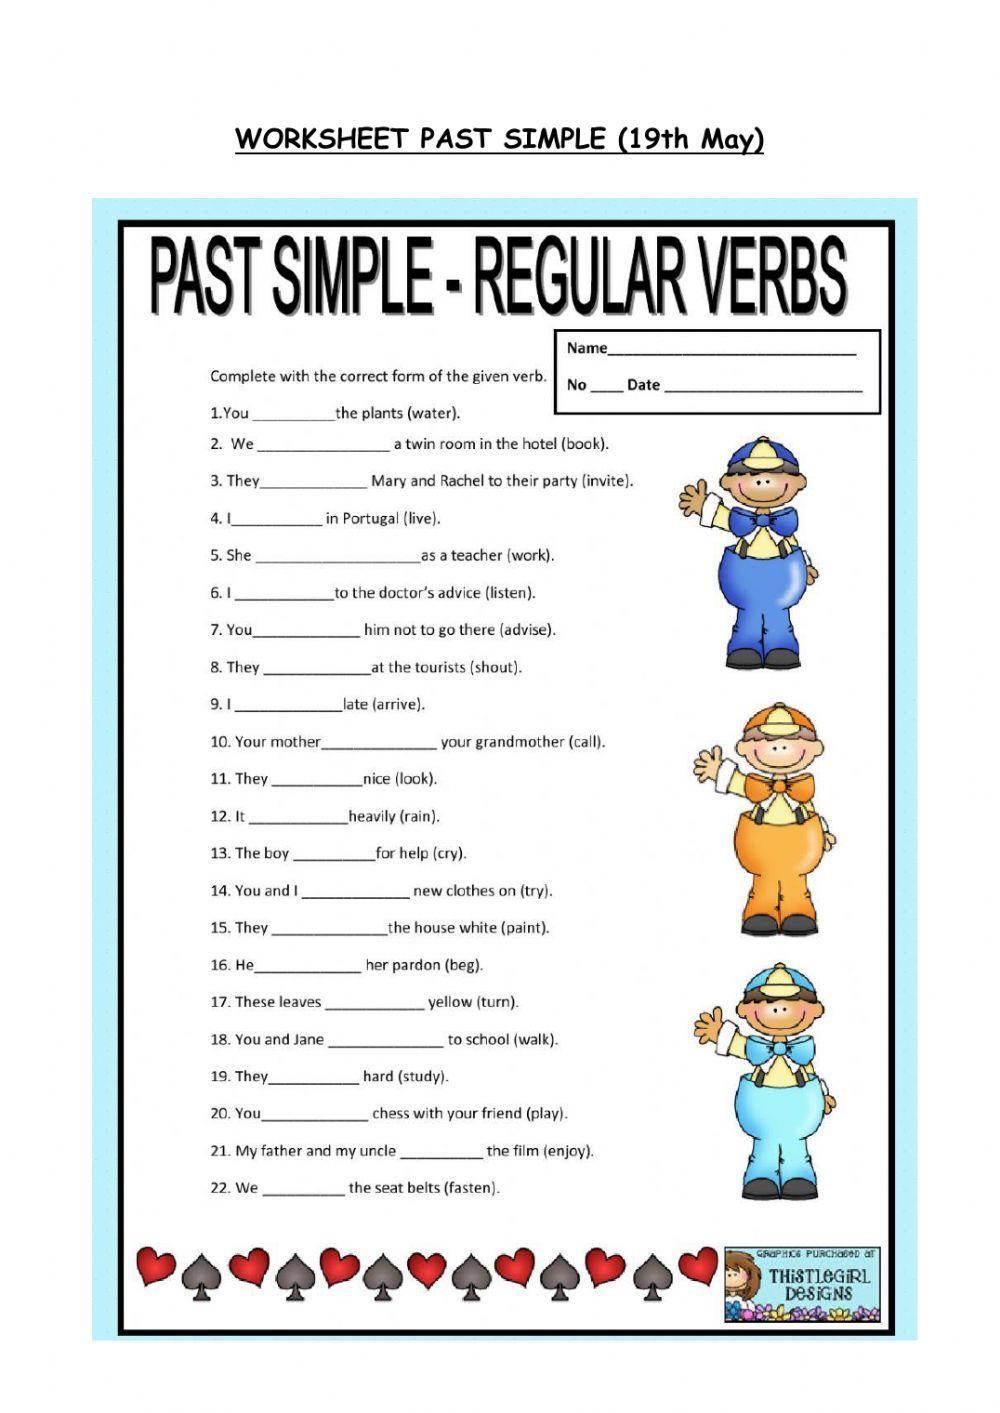 Past simple (regular verbs)